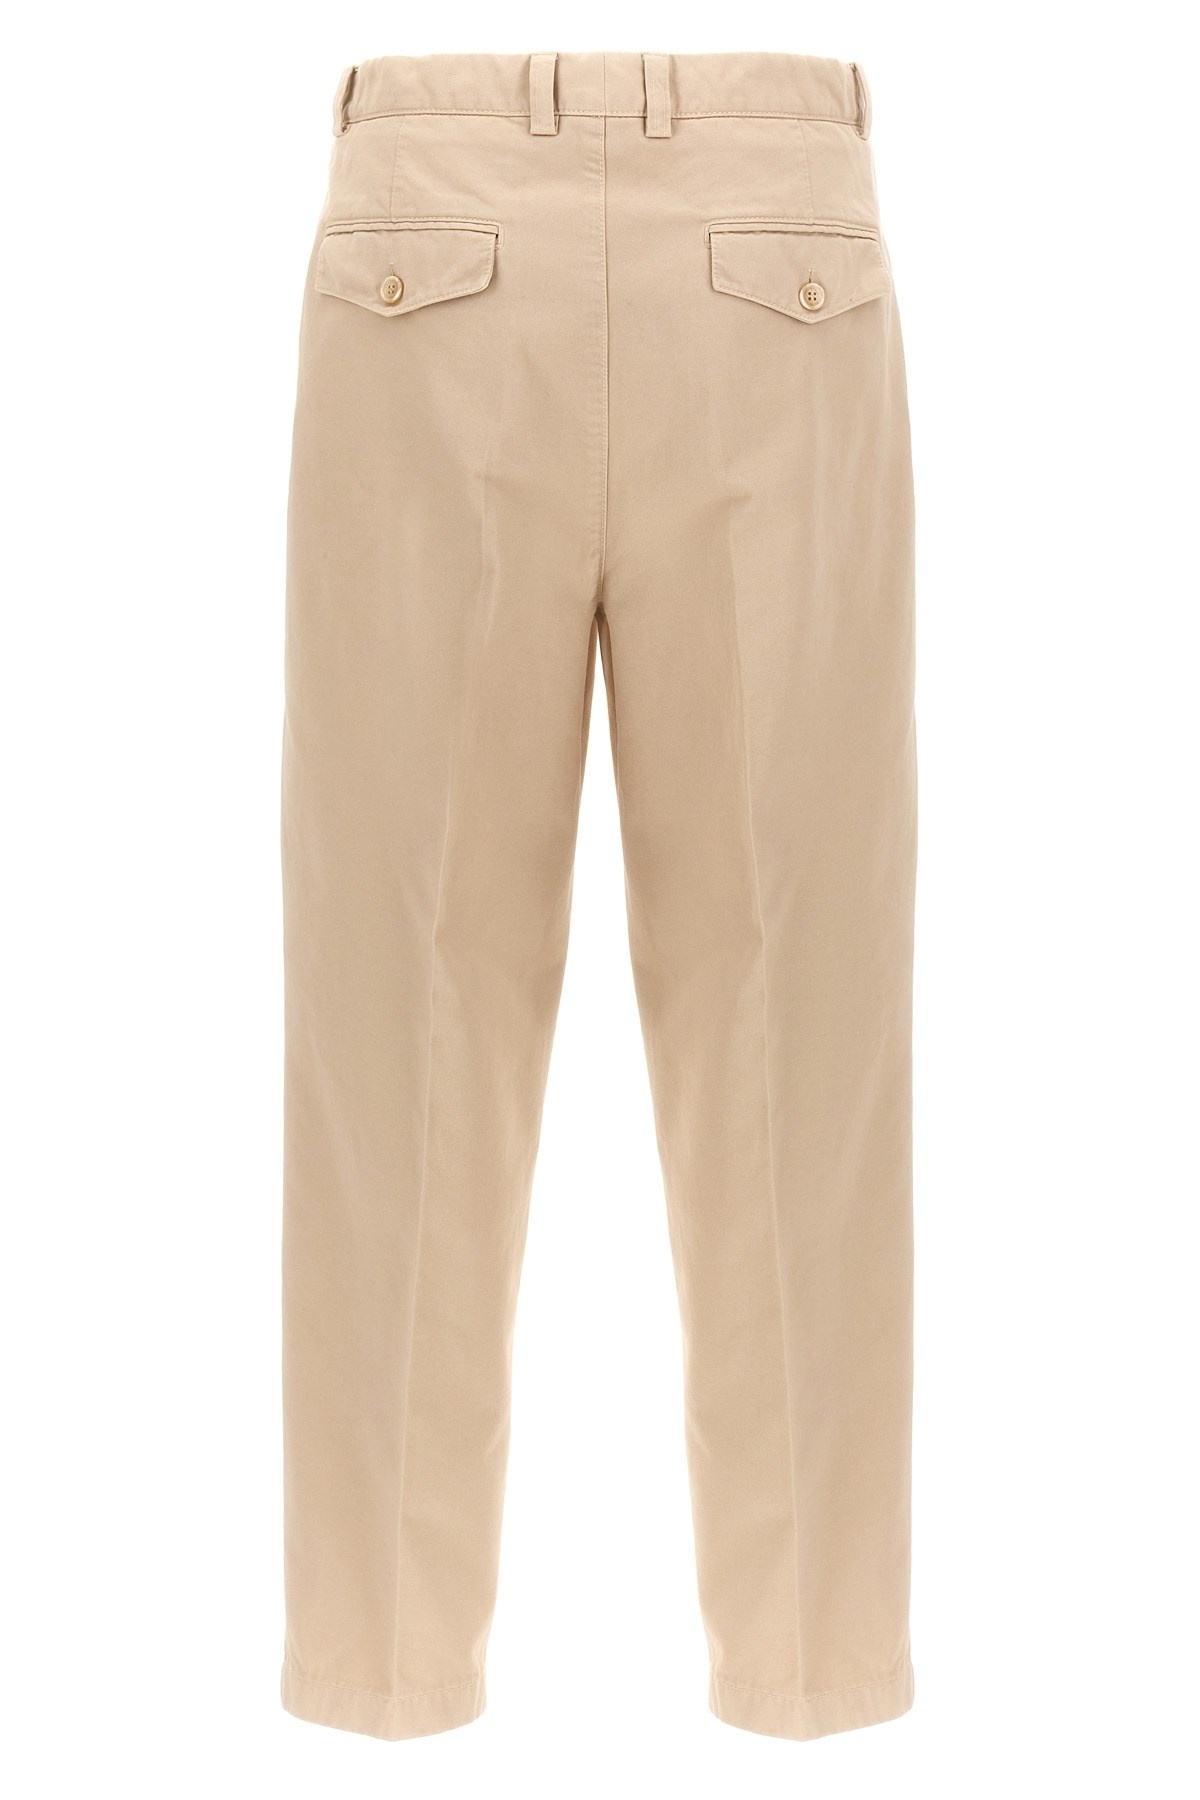 Cotton pants with front pleats - 2